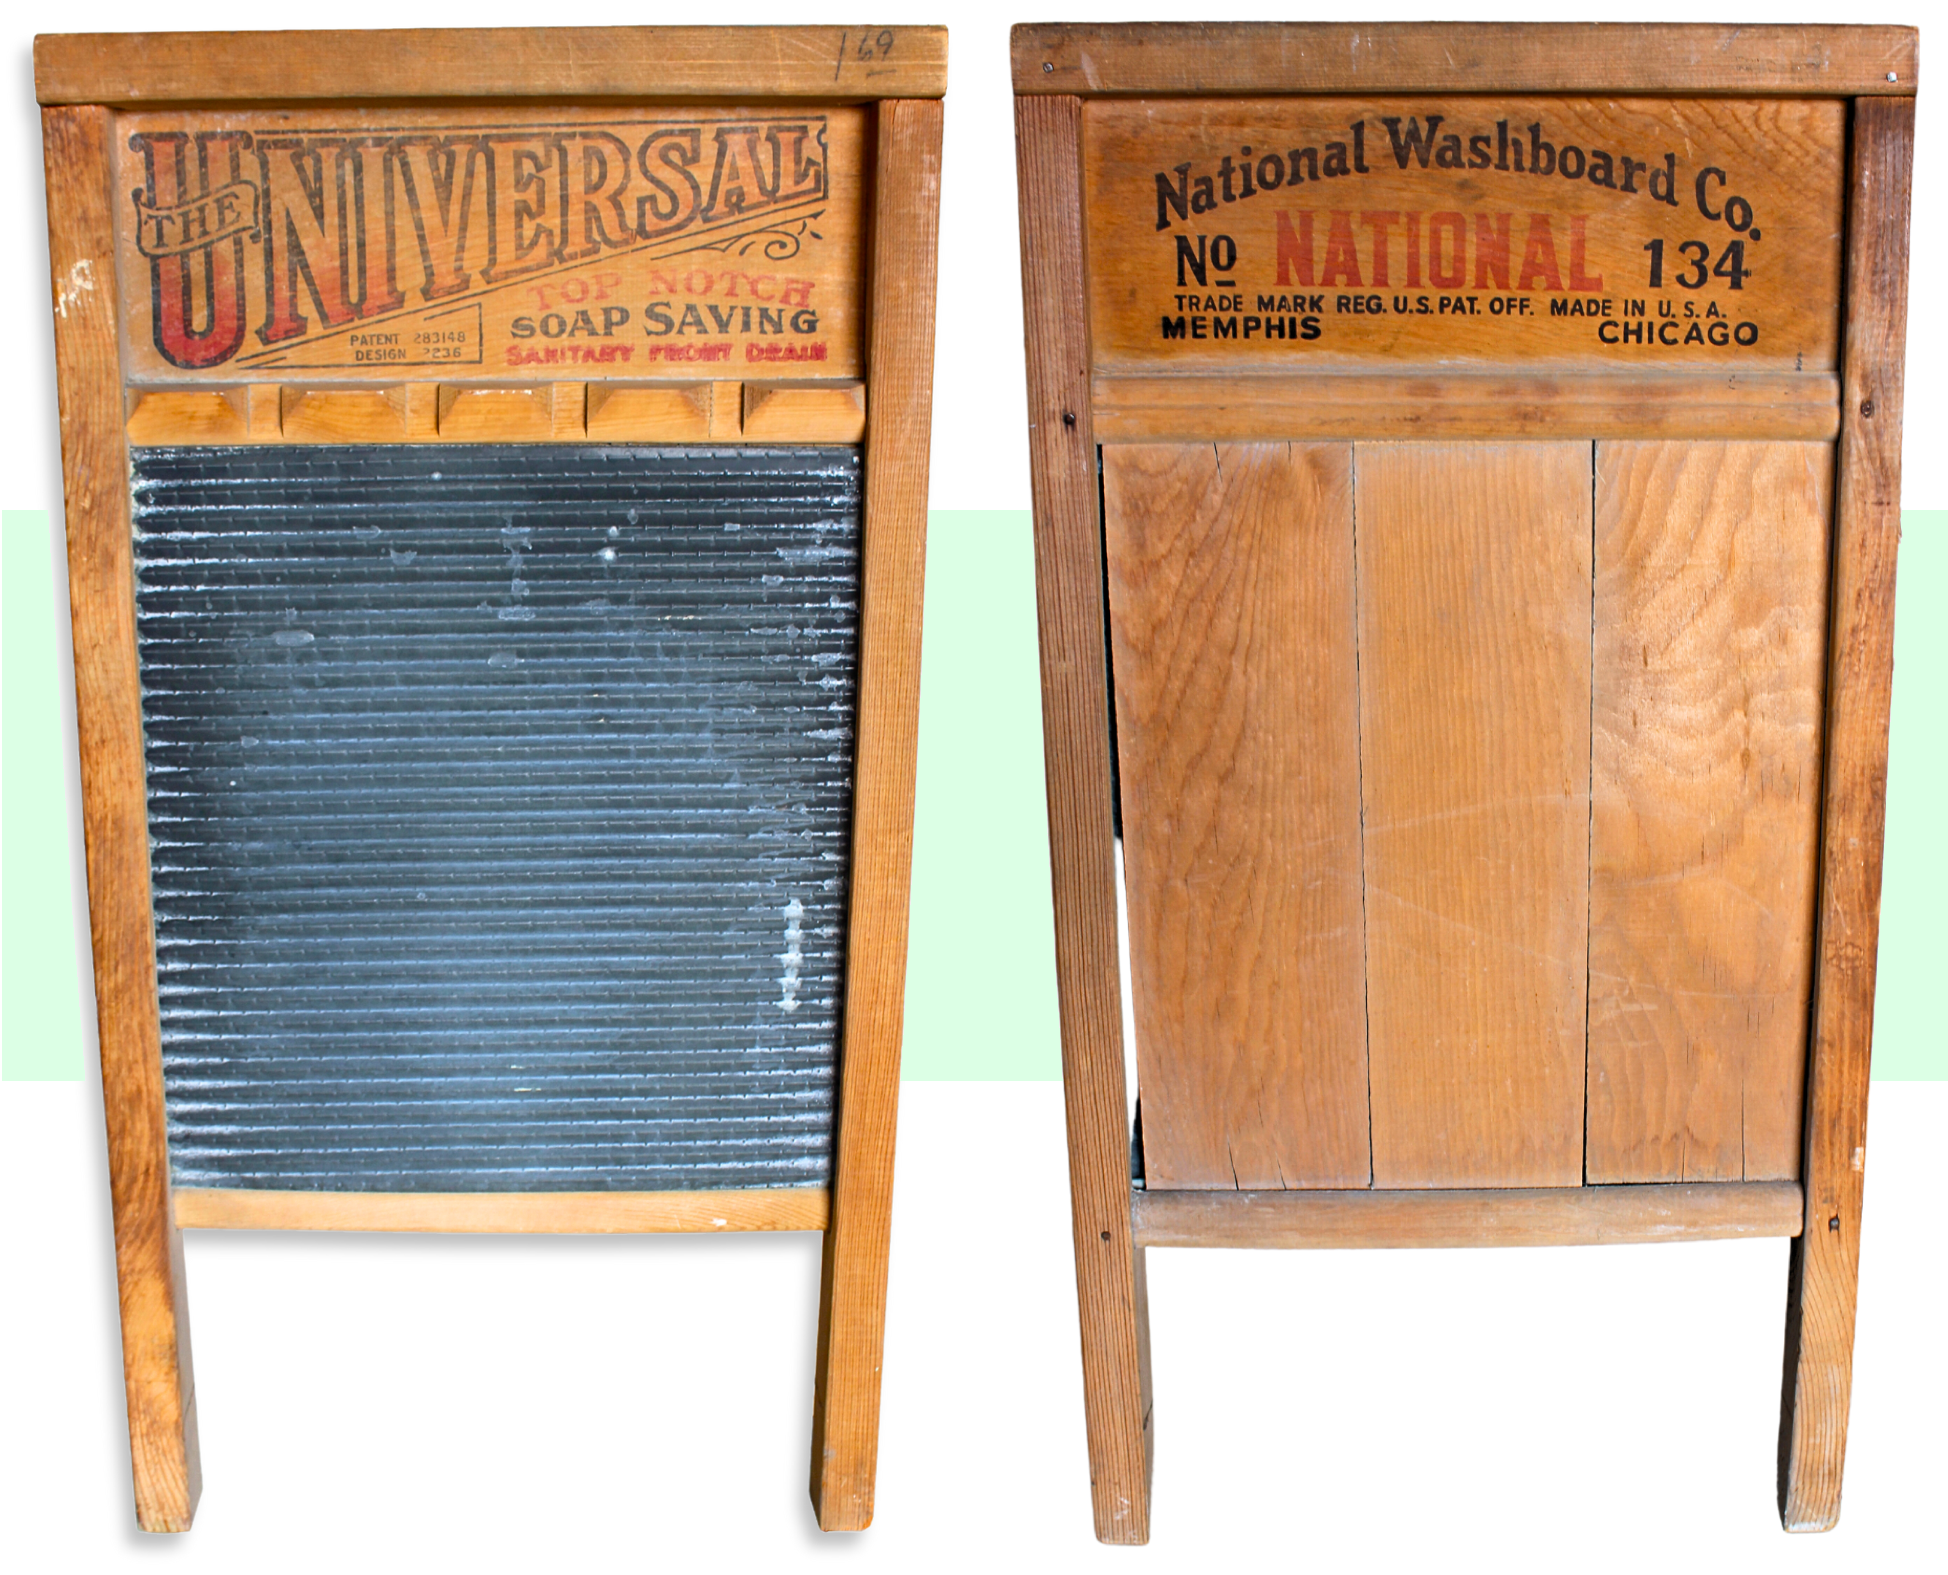 National Washboard Company, est. 1903